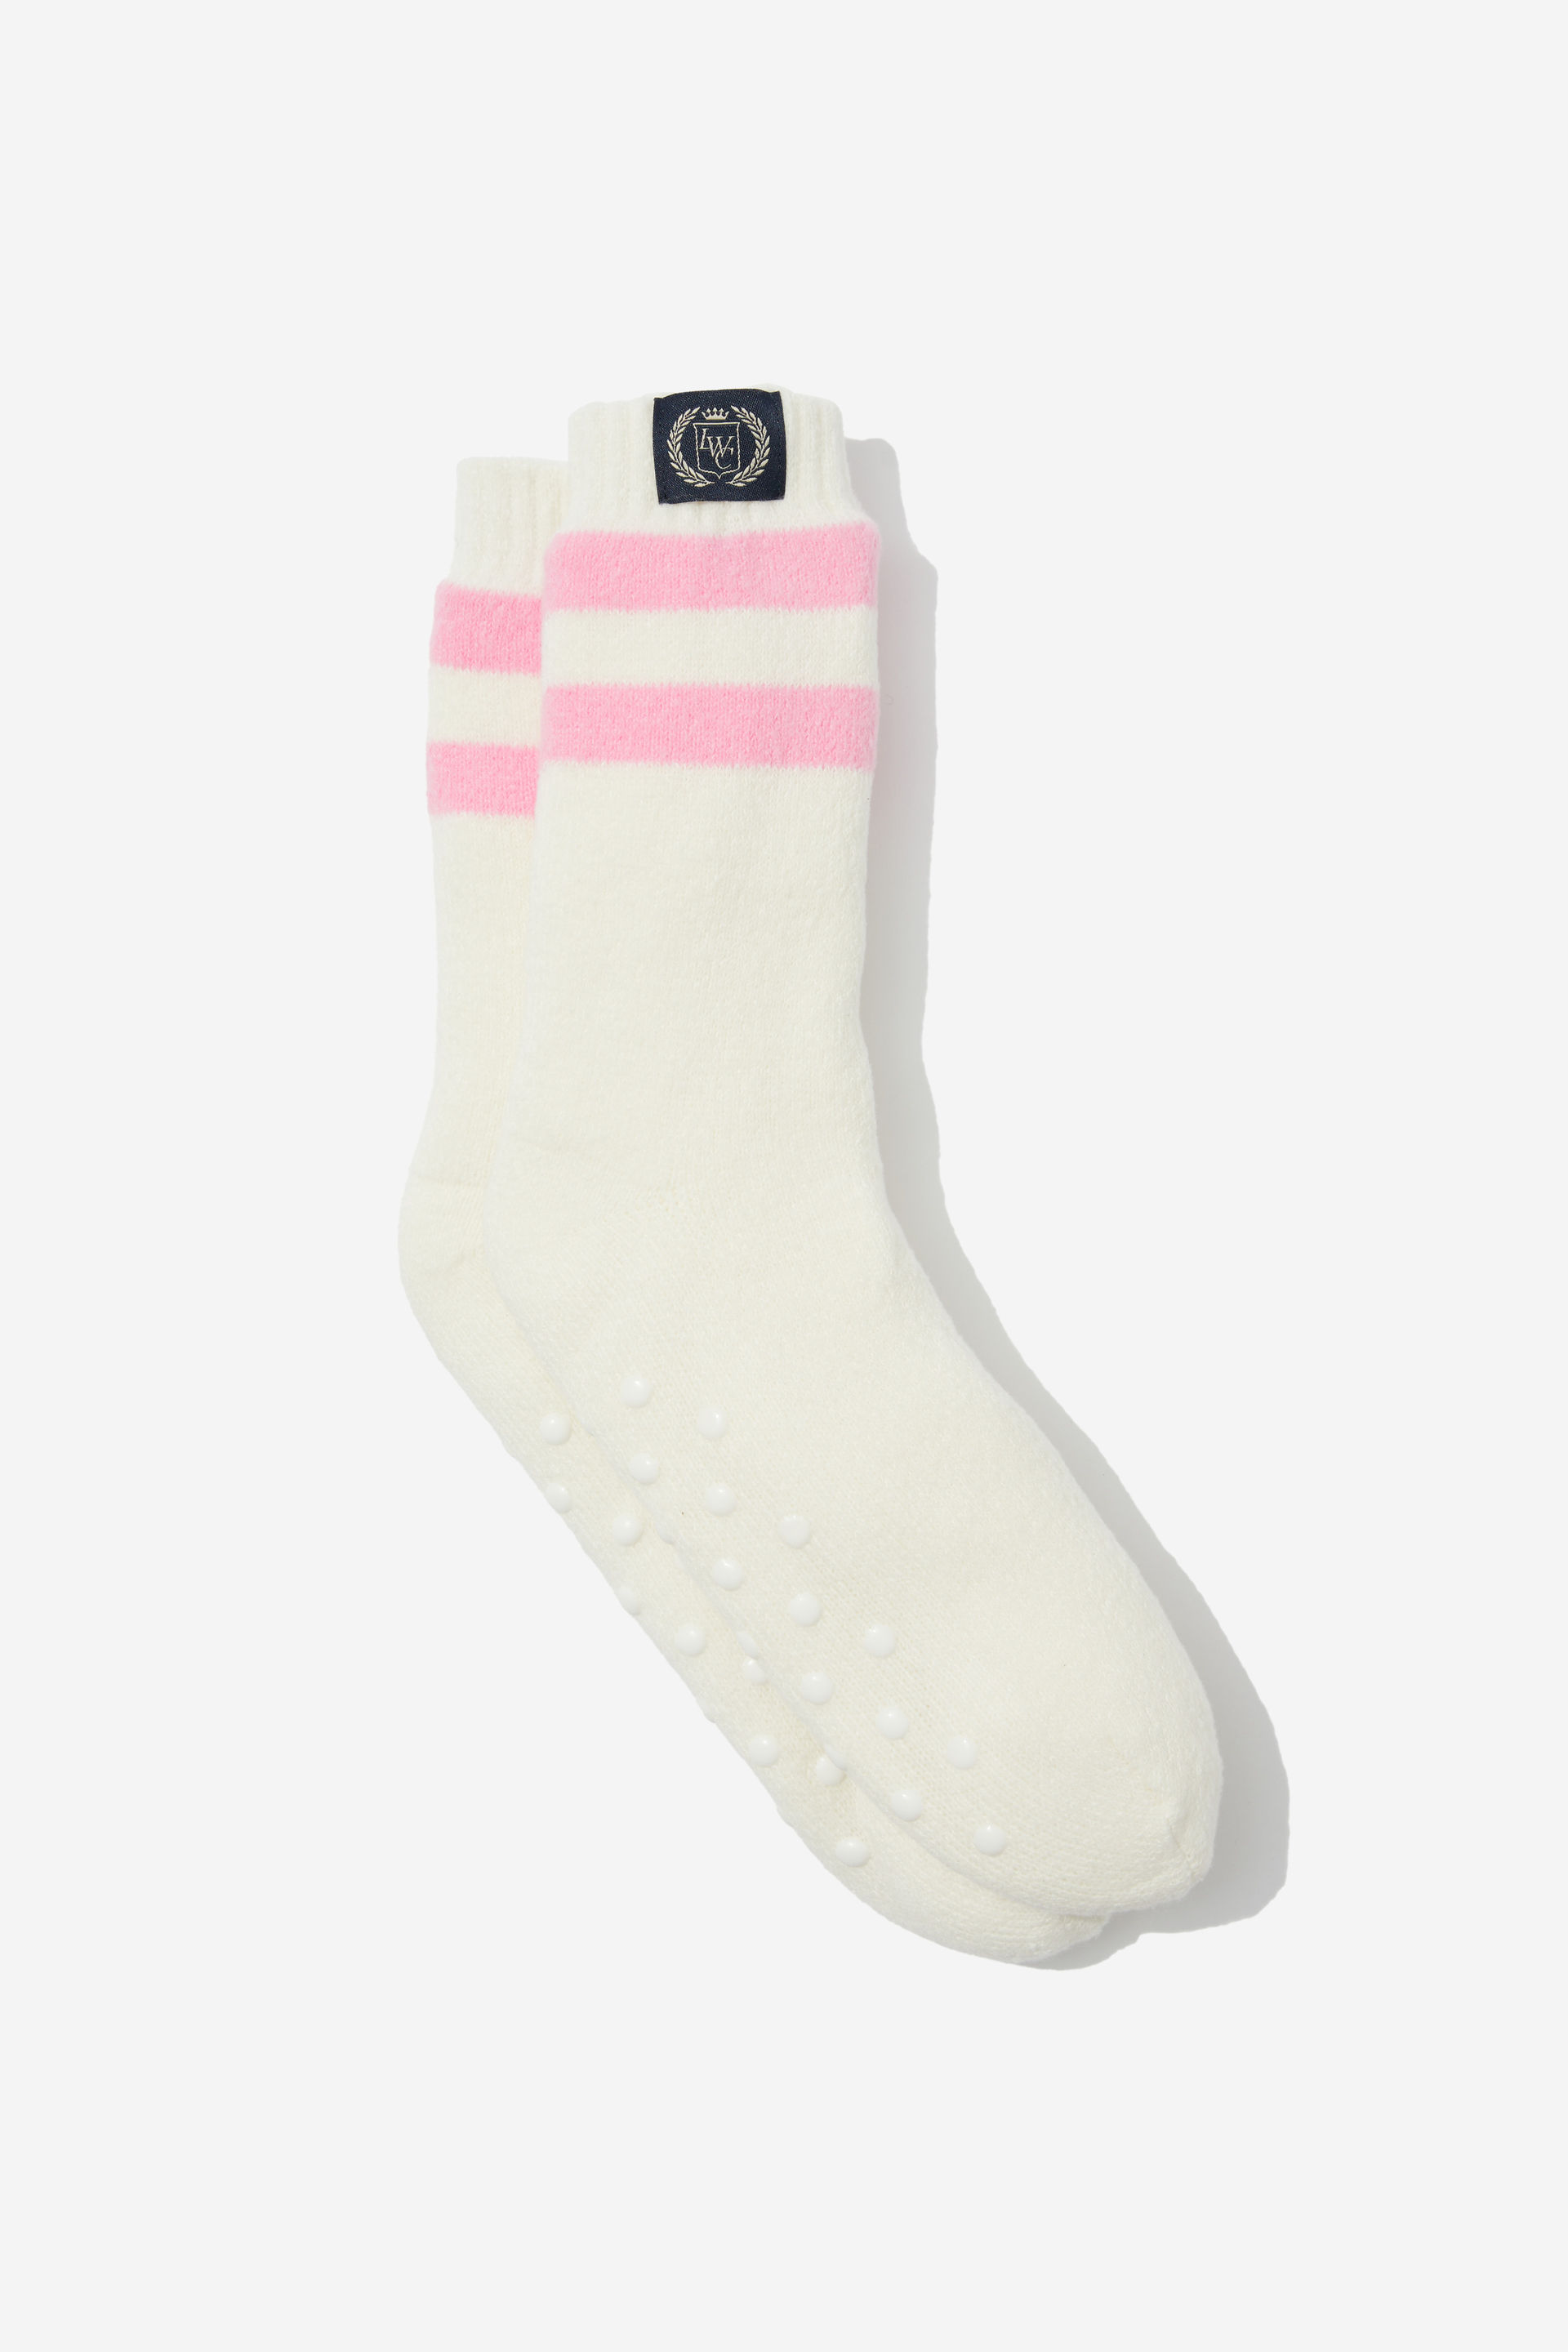 Typo - Slounge Around Slipper Sock - Ecru rosa powder stripe